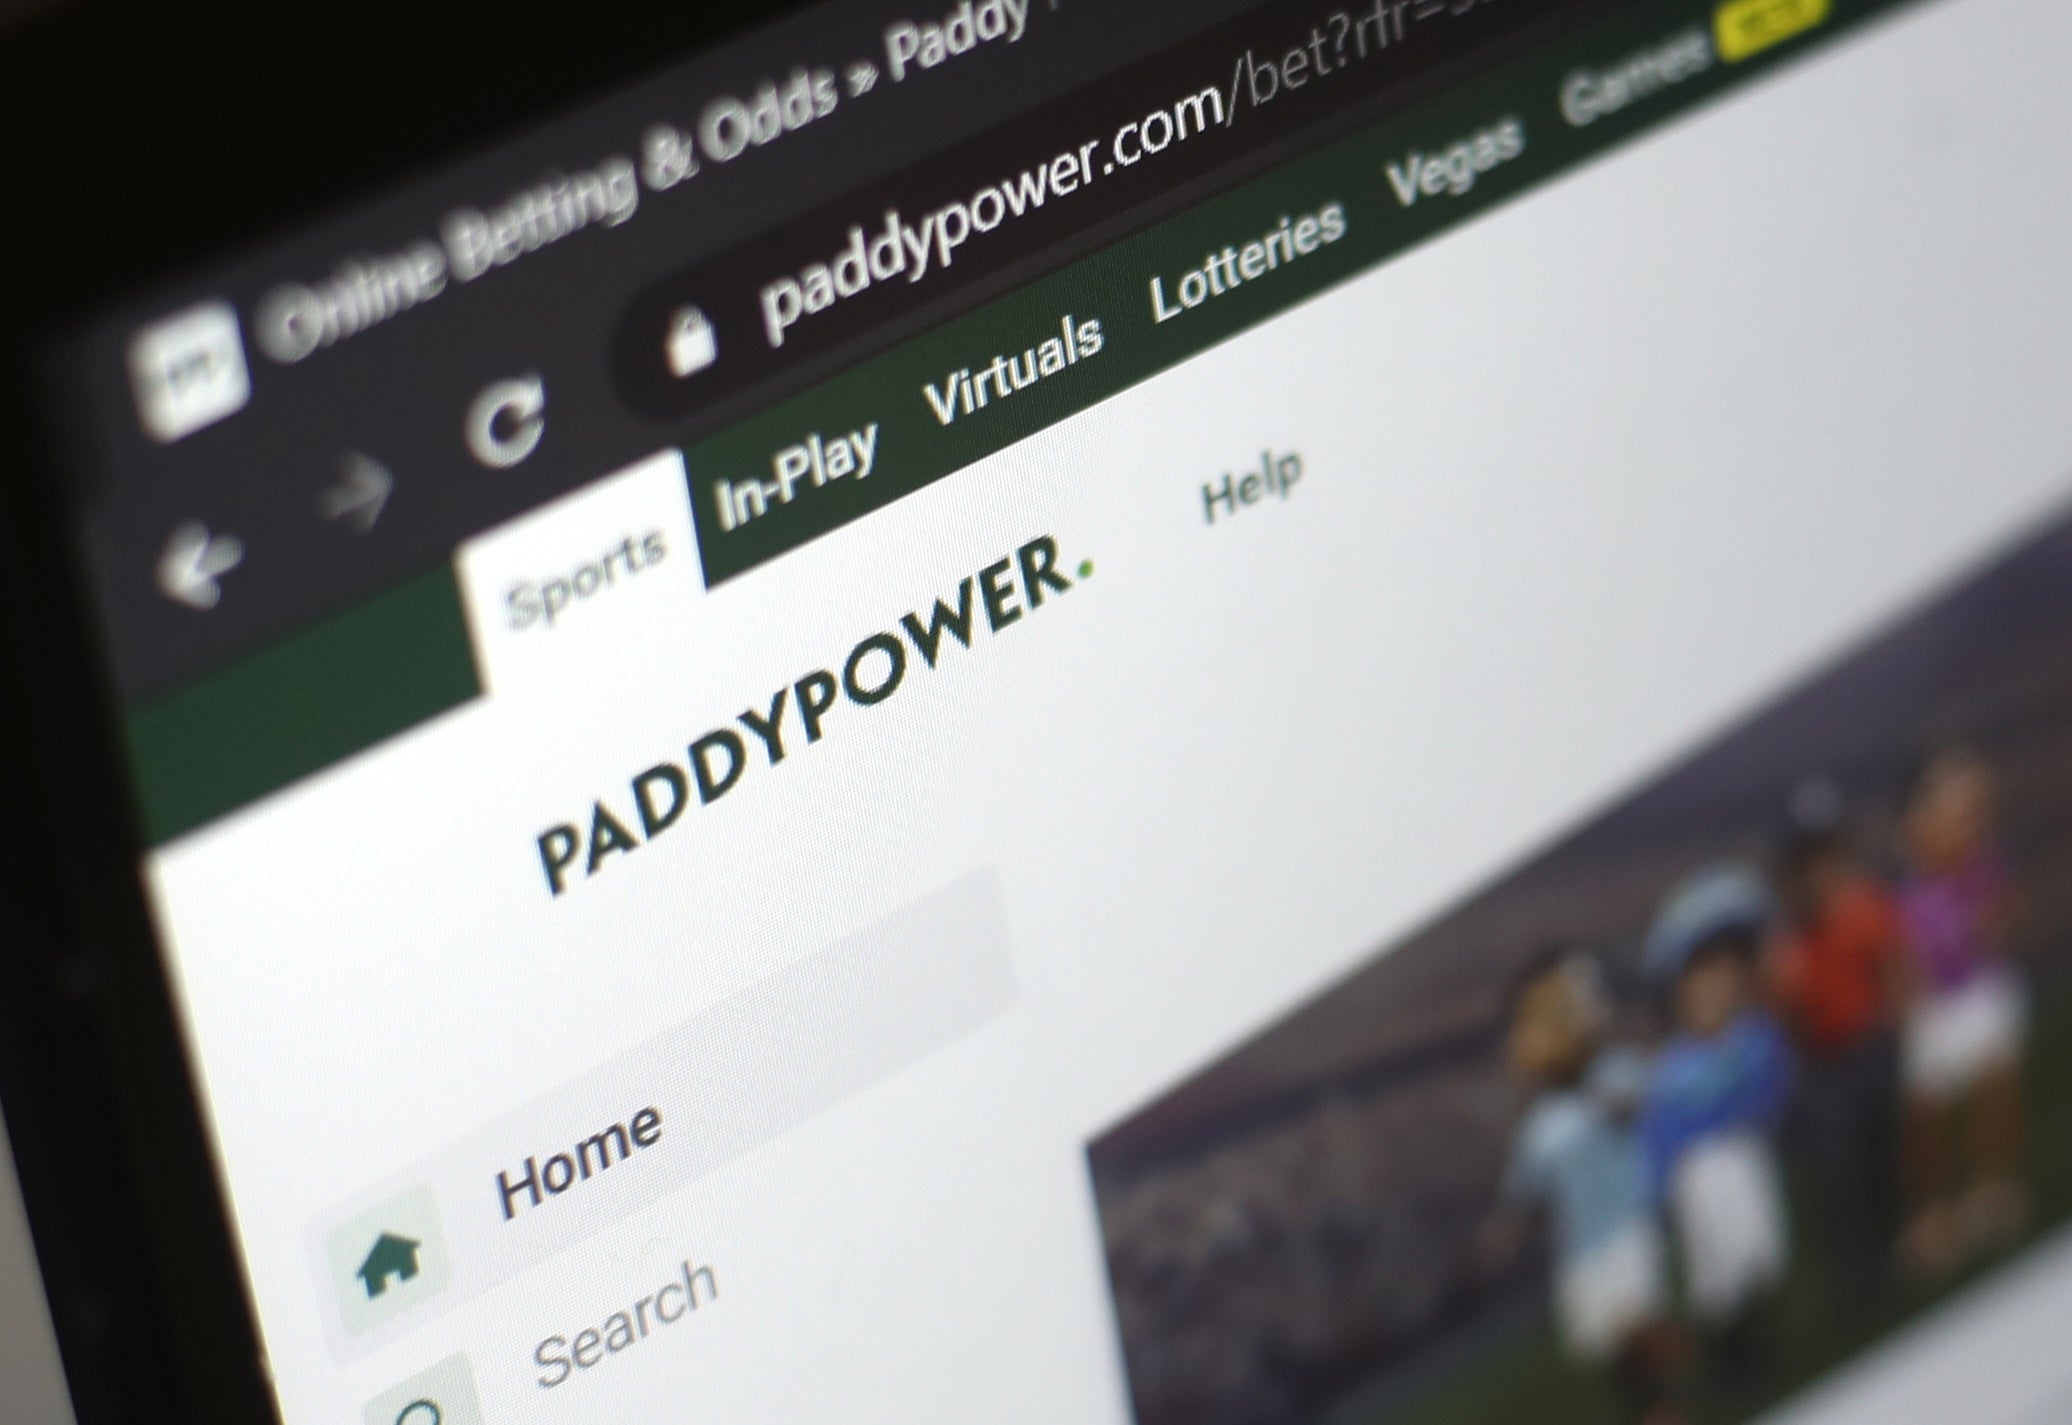 Paddy Power owner Flutter saw online gambling surge during lockdowns (Tim Goode/PA)